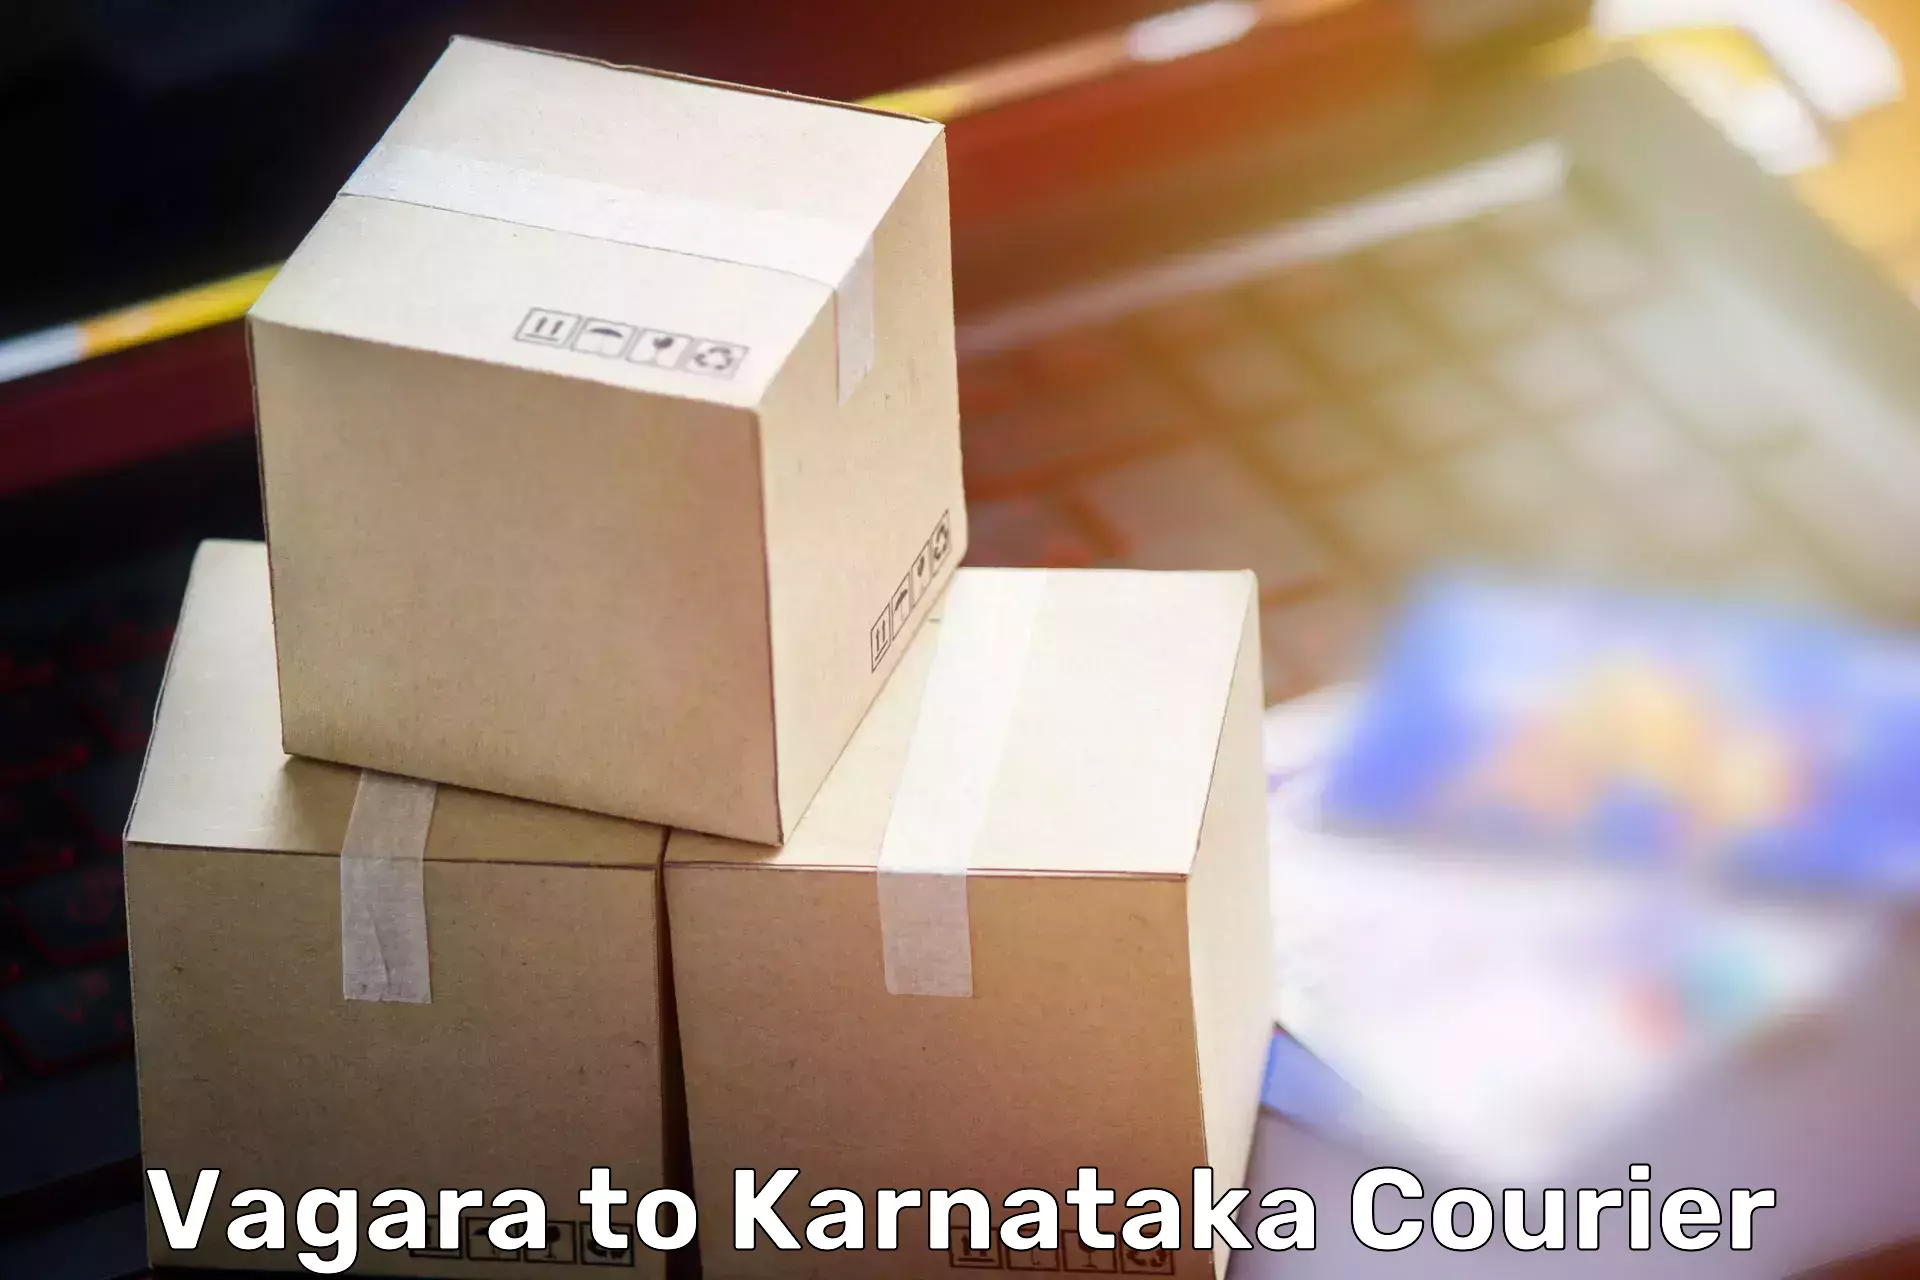 Efficient moving company Vagara to Karnataka